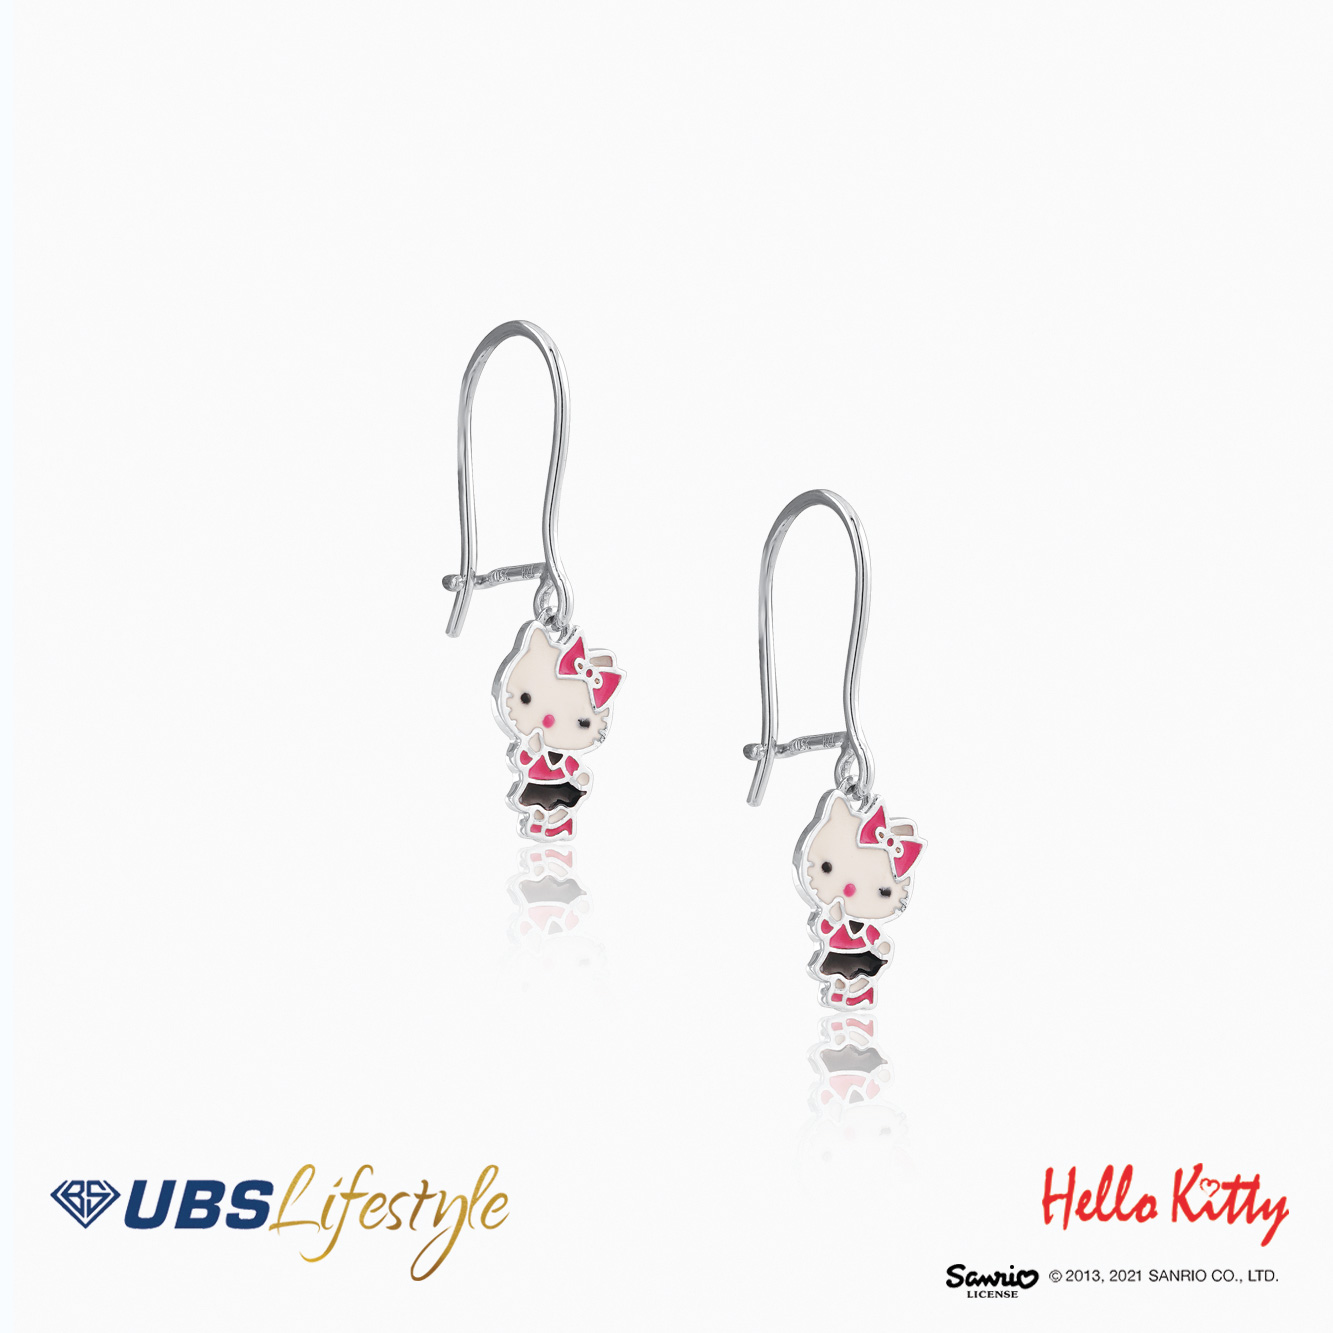 UBS Anting Emas Anak Sanrio Hello Kitty - Aaz0025 - 17K